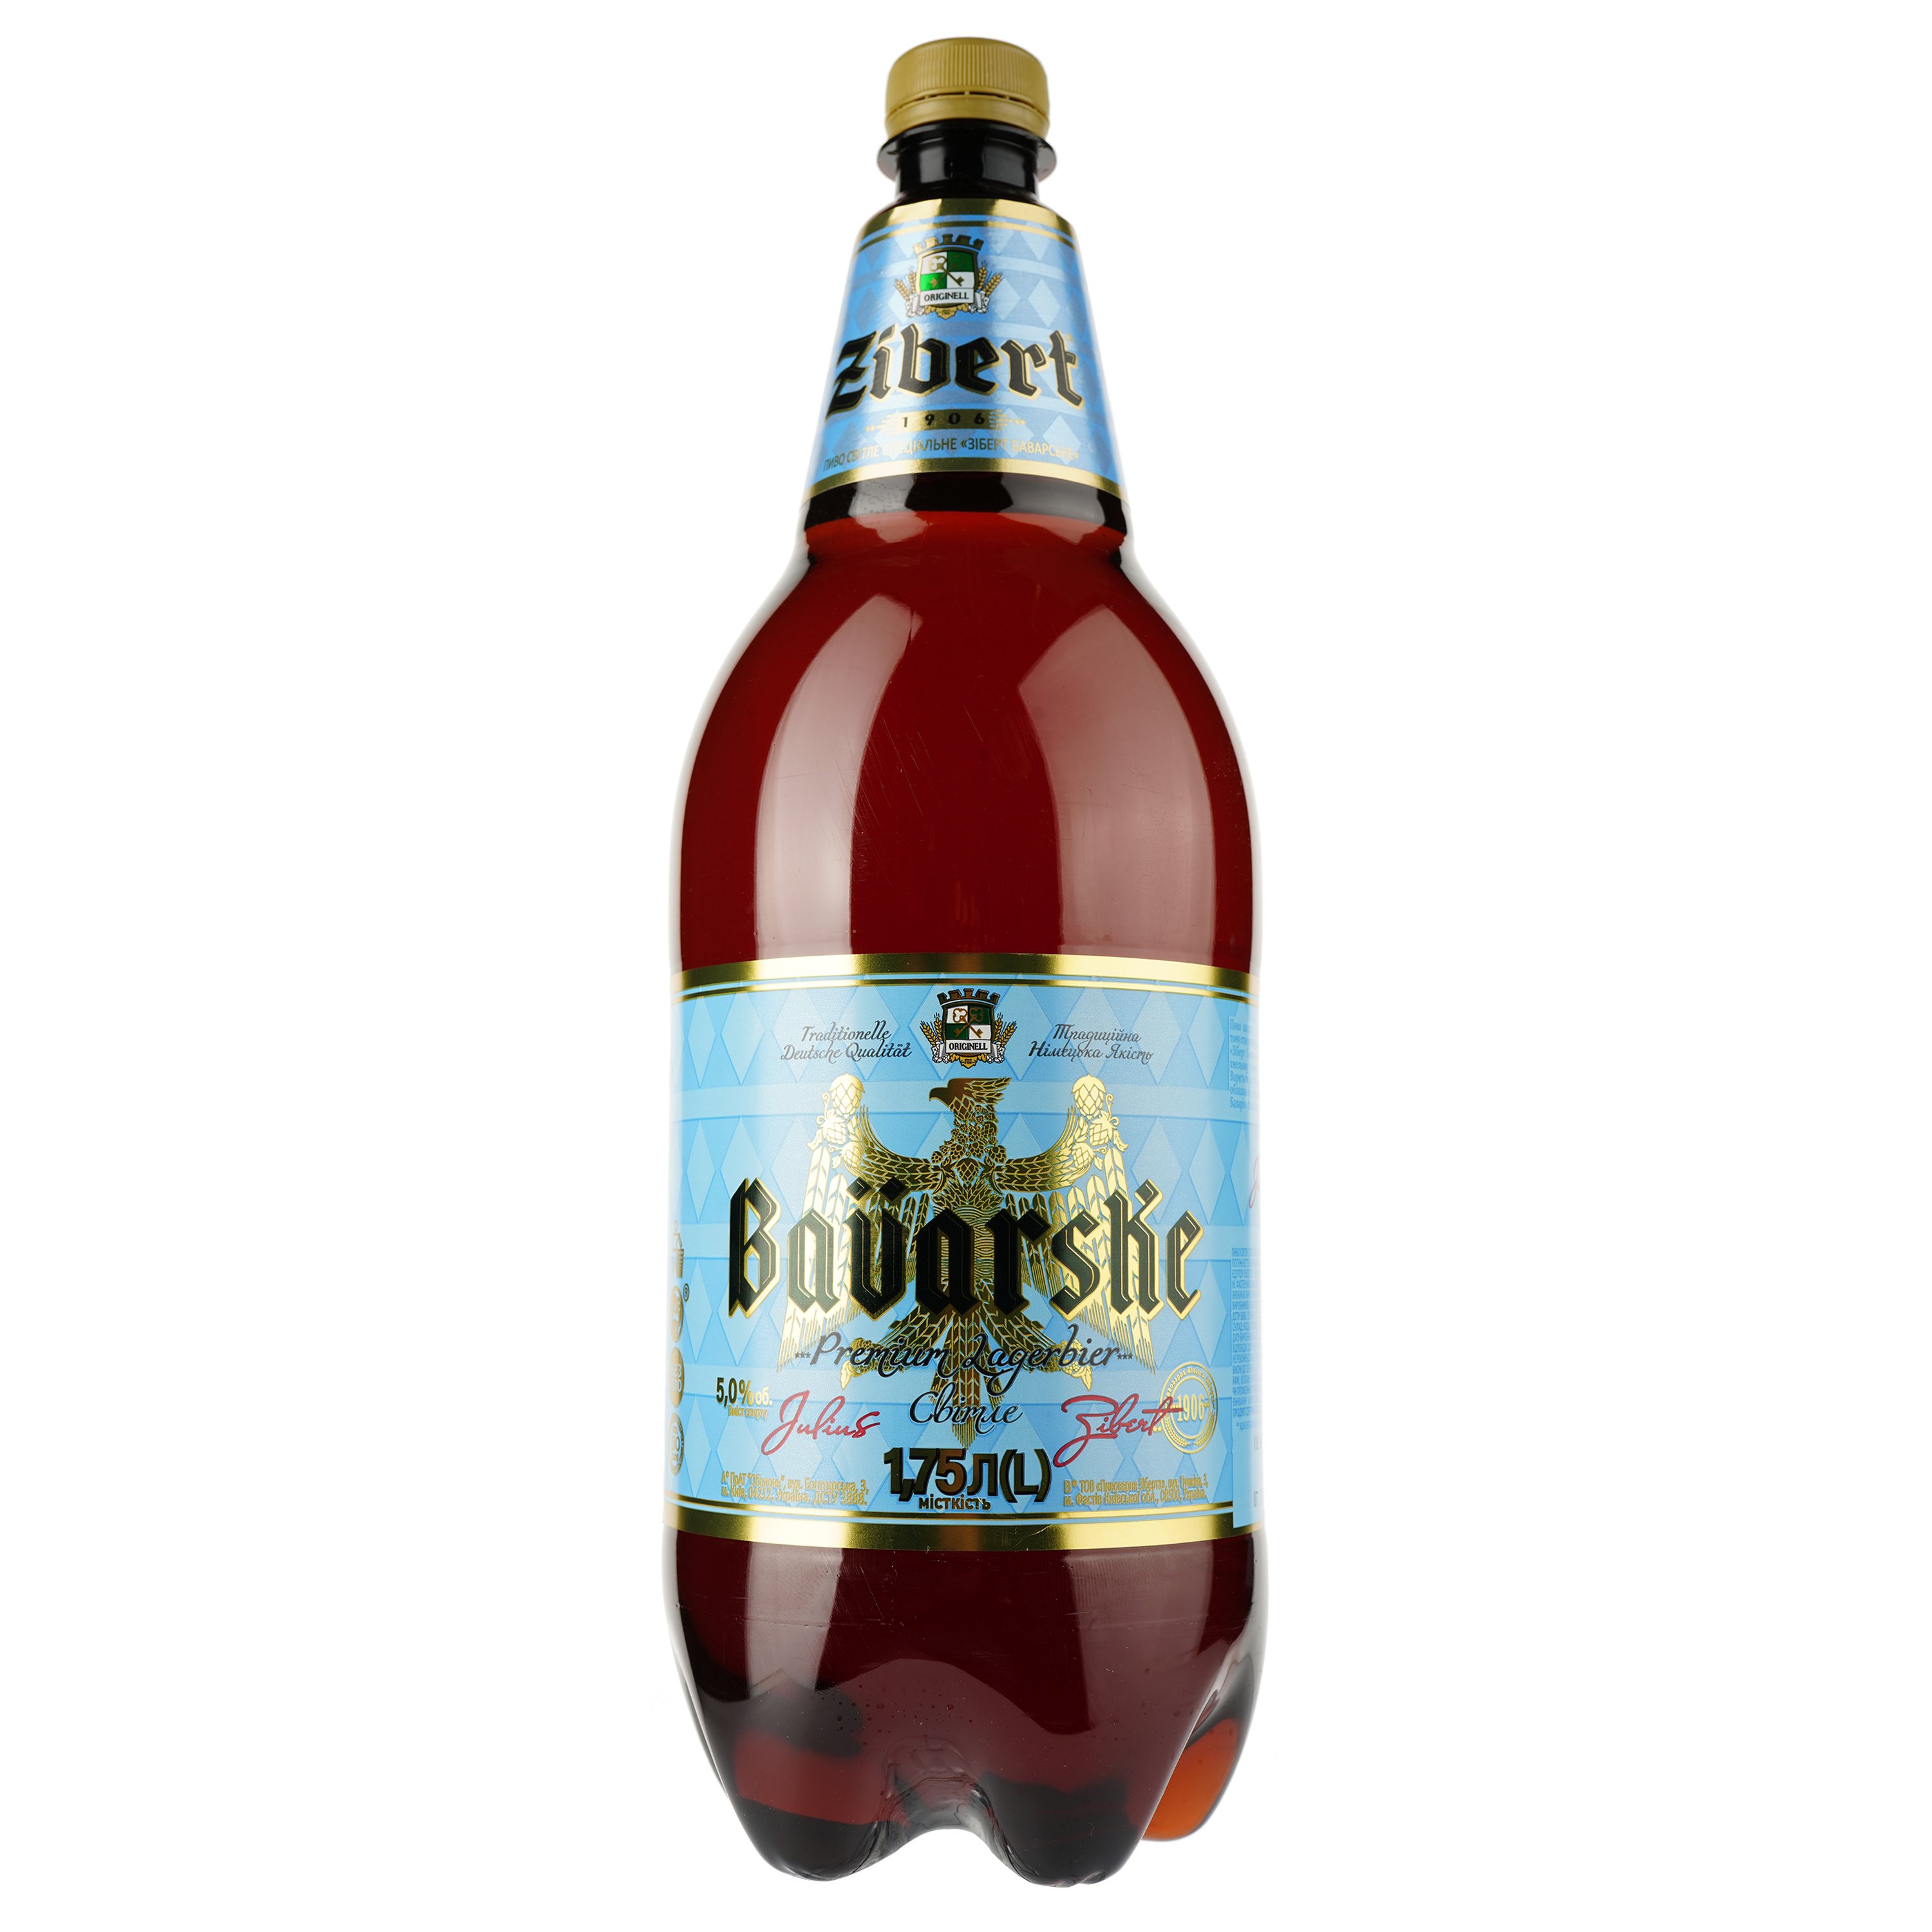 Пиво Zibert Баварське світле, 5%, 1,75 л - фото 1